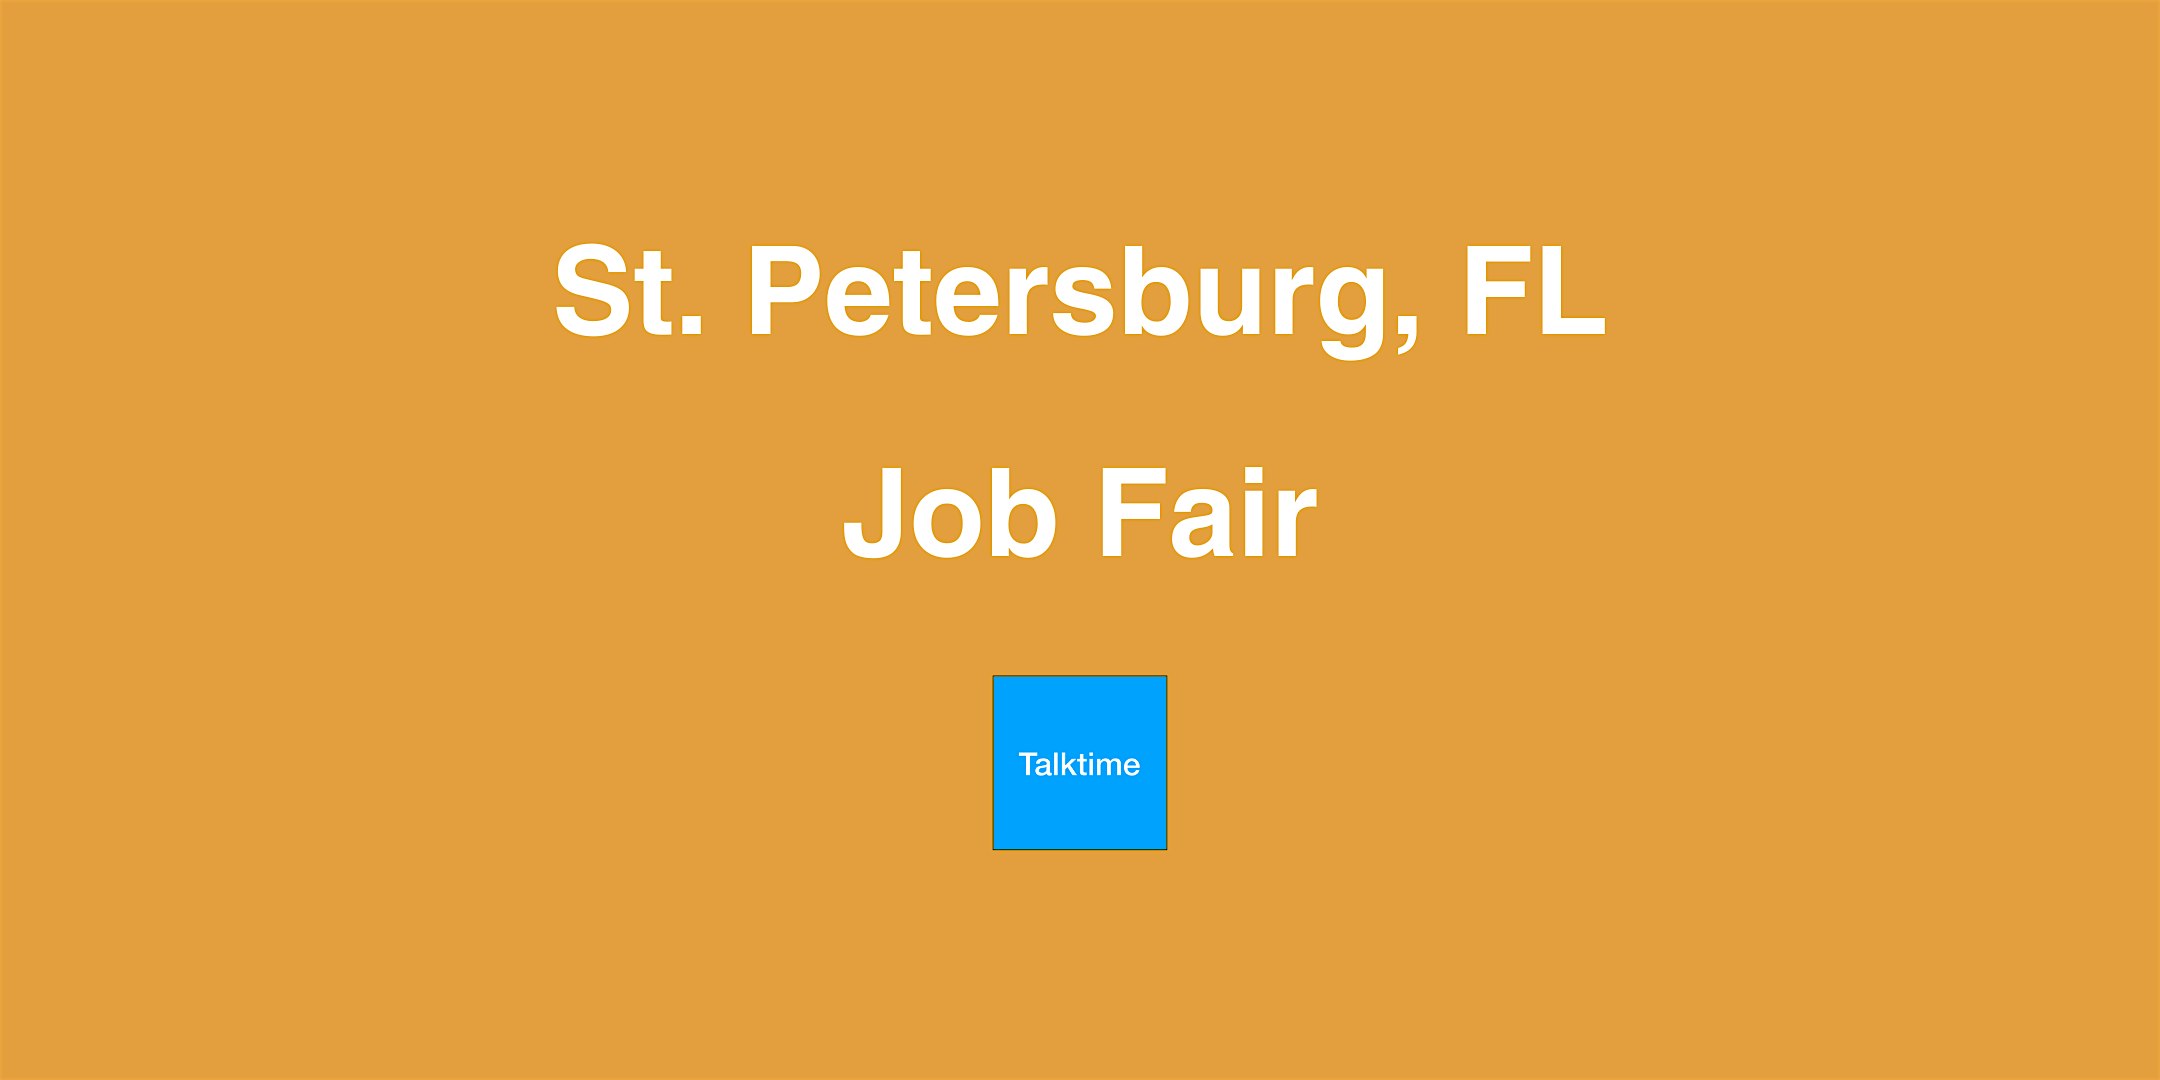 Job Fair - St. Petersburg